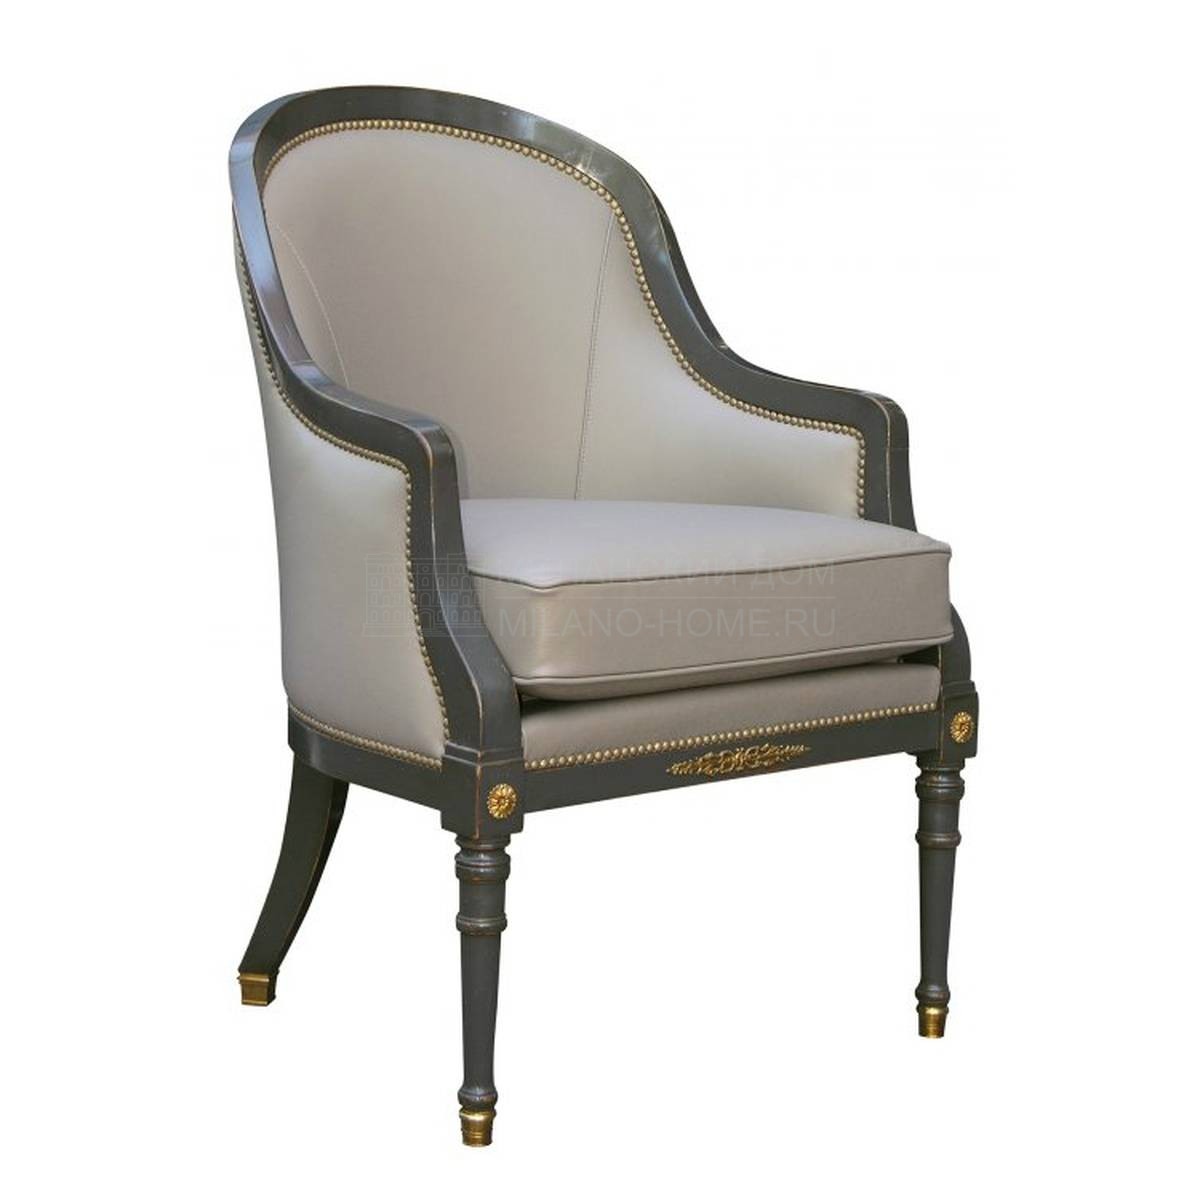 Кожаное кресло 197B armchair leather из Франции фабрики MOISSONNIER